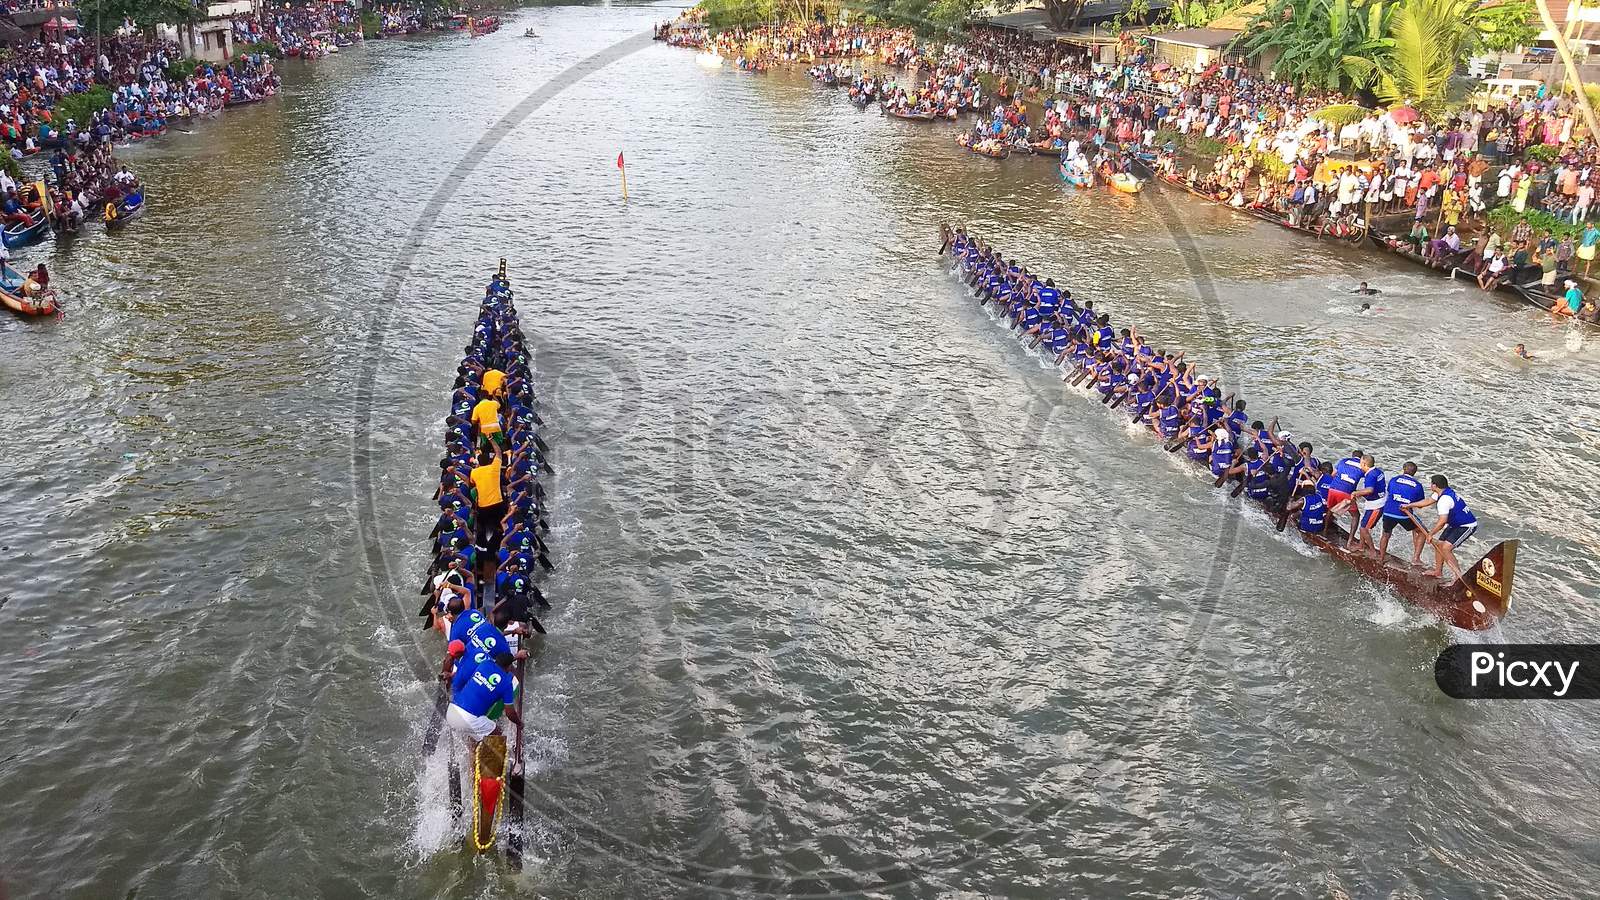 Oarsmen in a vepu boat teams row vigorously in the Kottayam Boat races